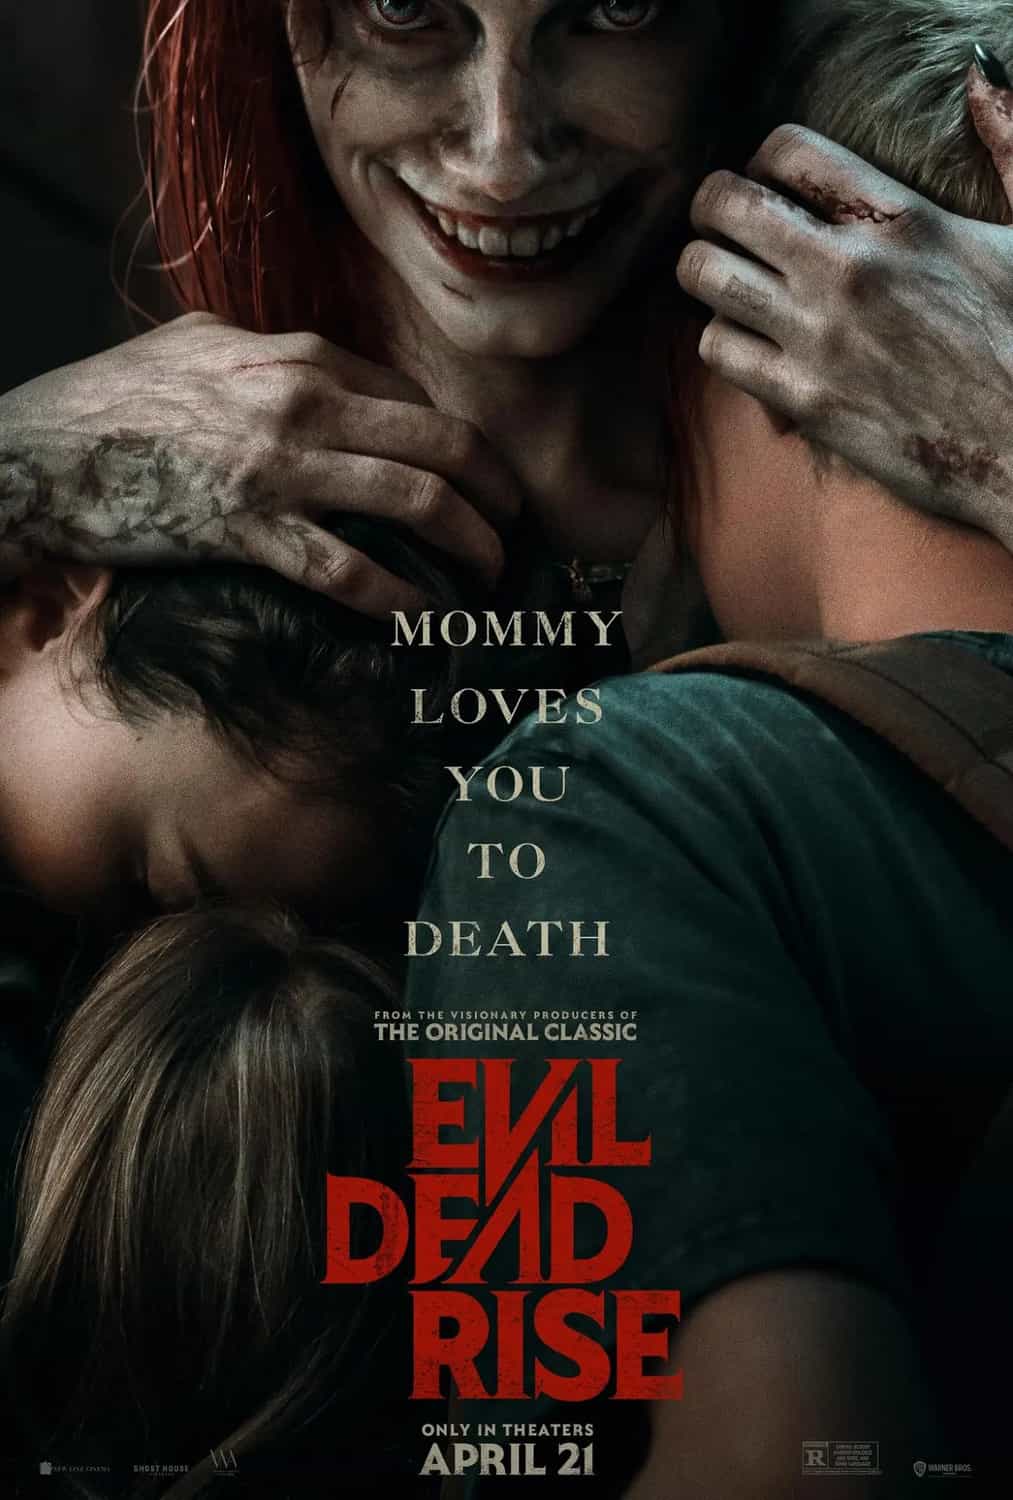 A new trailer released for Evil Dead Rise starring Alyssa Sutherland - movie UK release date 21st April 2023 #evildeadrise